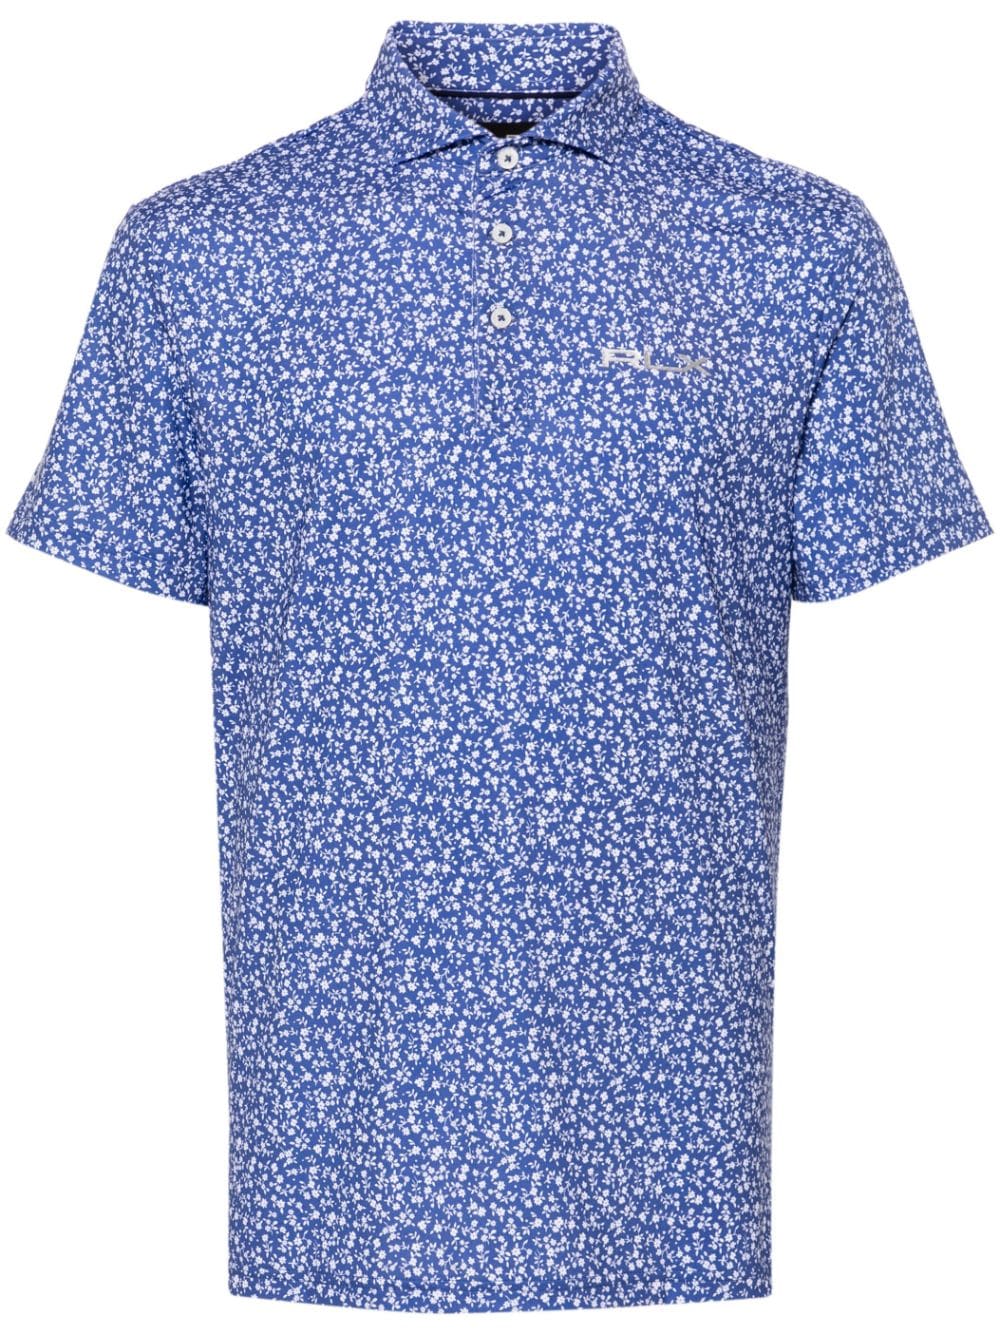 floral-print polo shirt